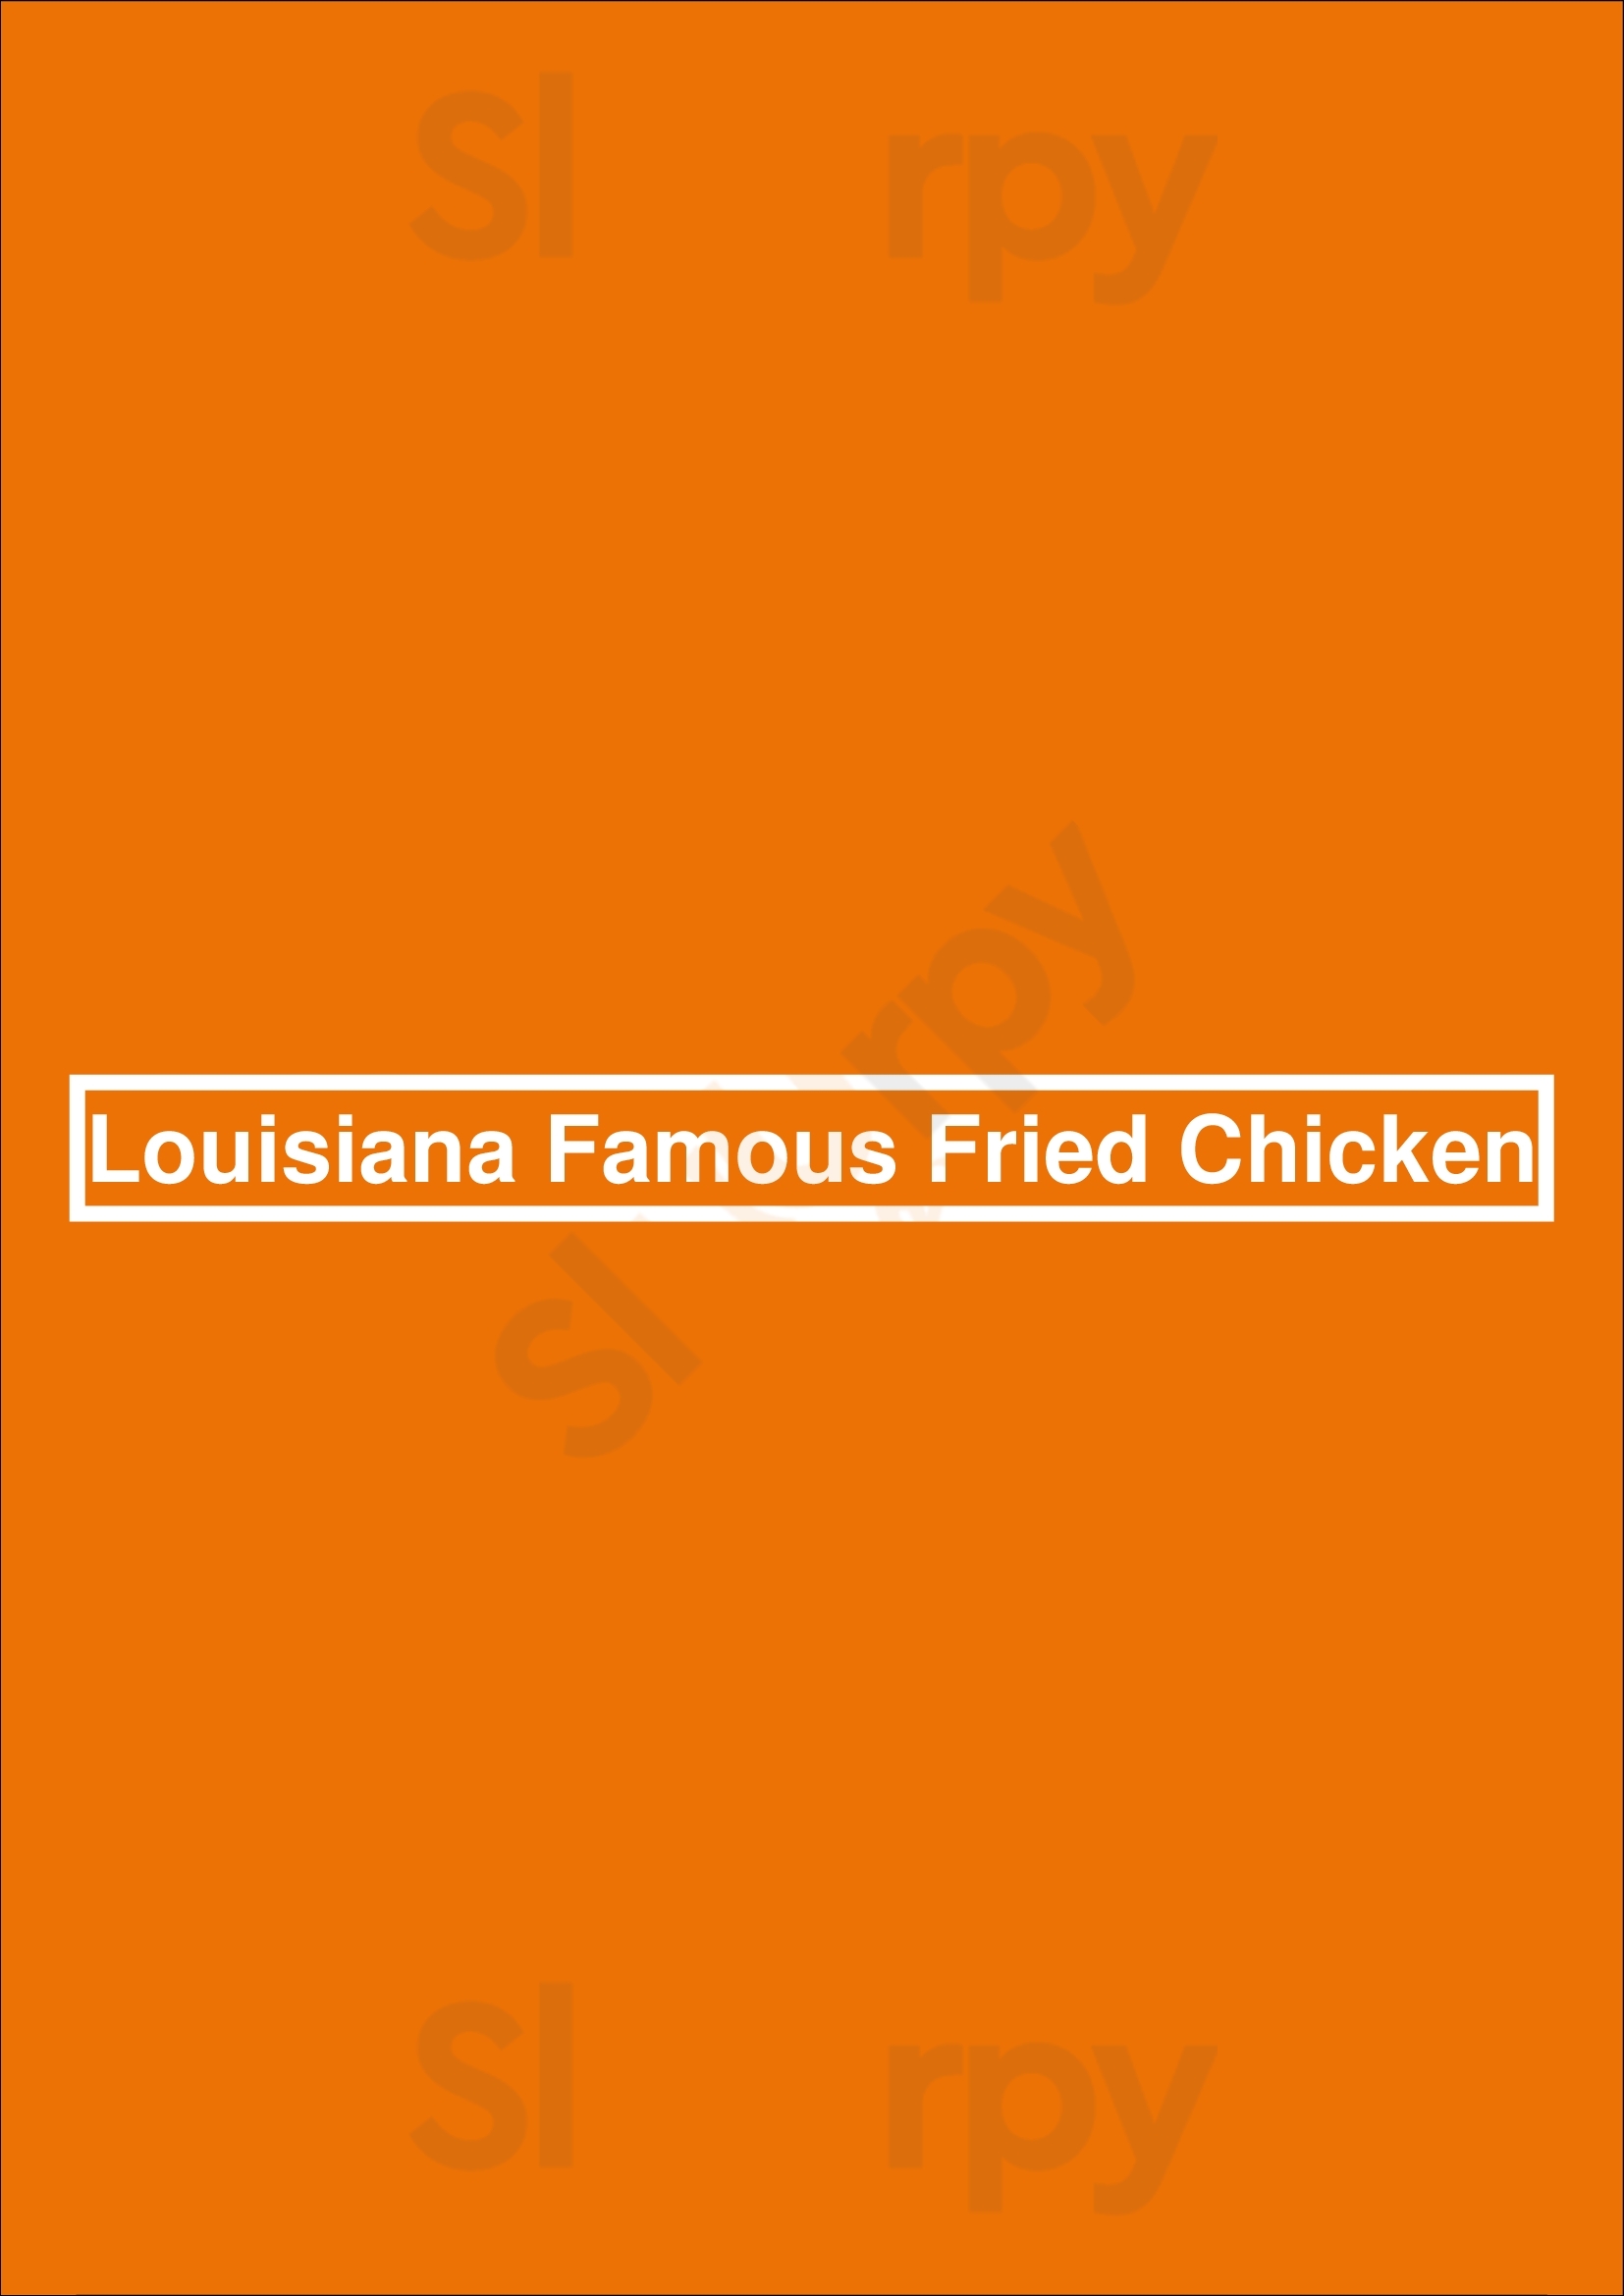 Louisiana Famous Fried Chicken Houston Menu - 1